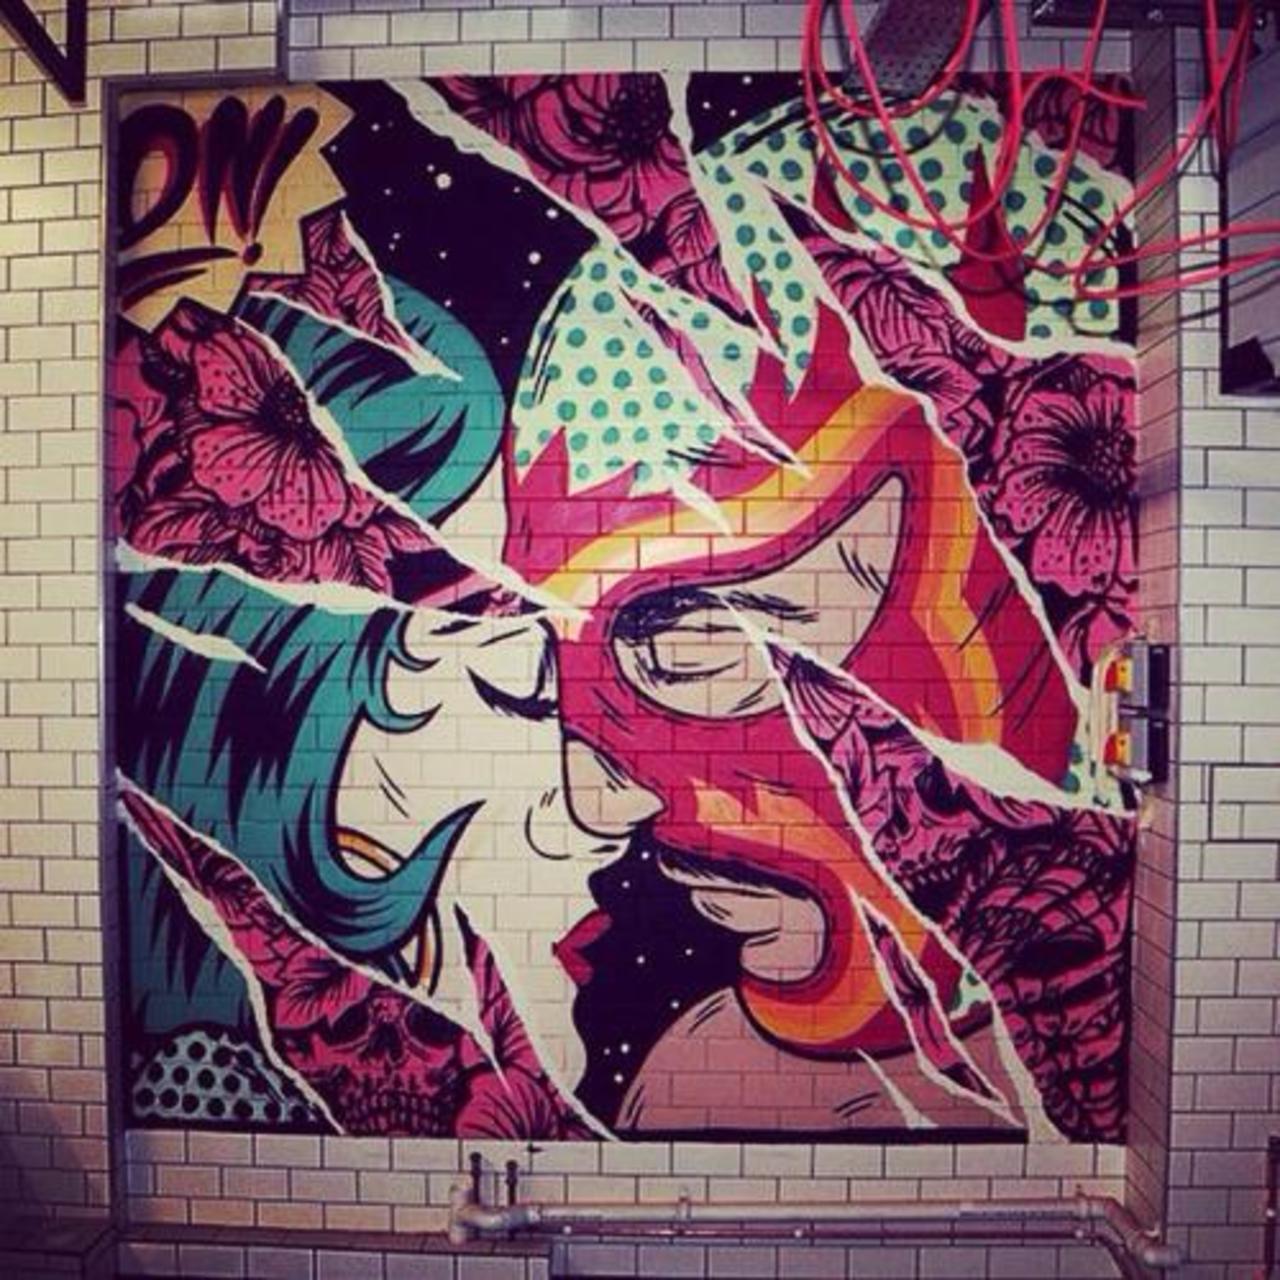 ##Streetart ##Sprayart ##Stencil ##Graffiti ... - #Mural - #ZangArt #Showcase - http://bit.ly/1MhaPF7 http://t.co/wsSVO09Aos